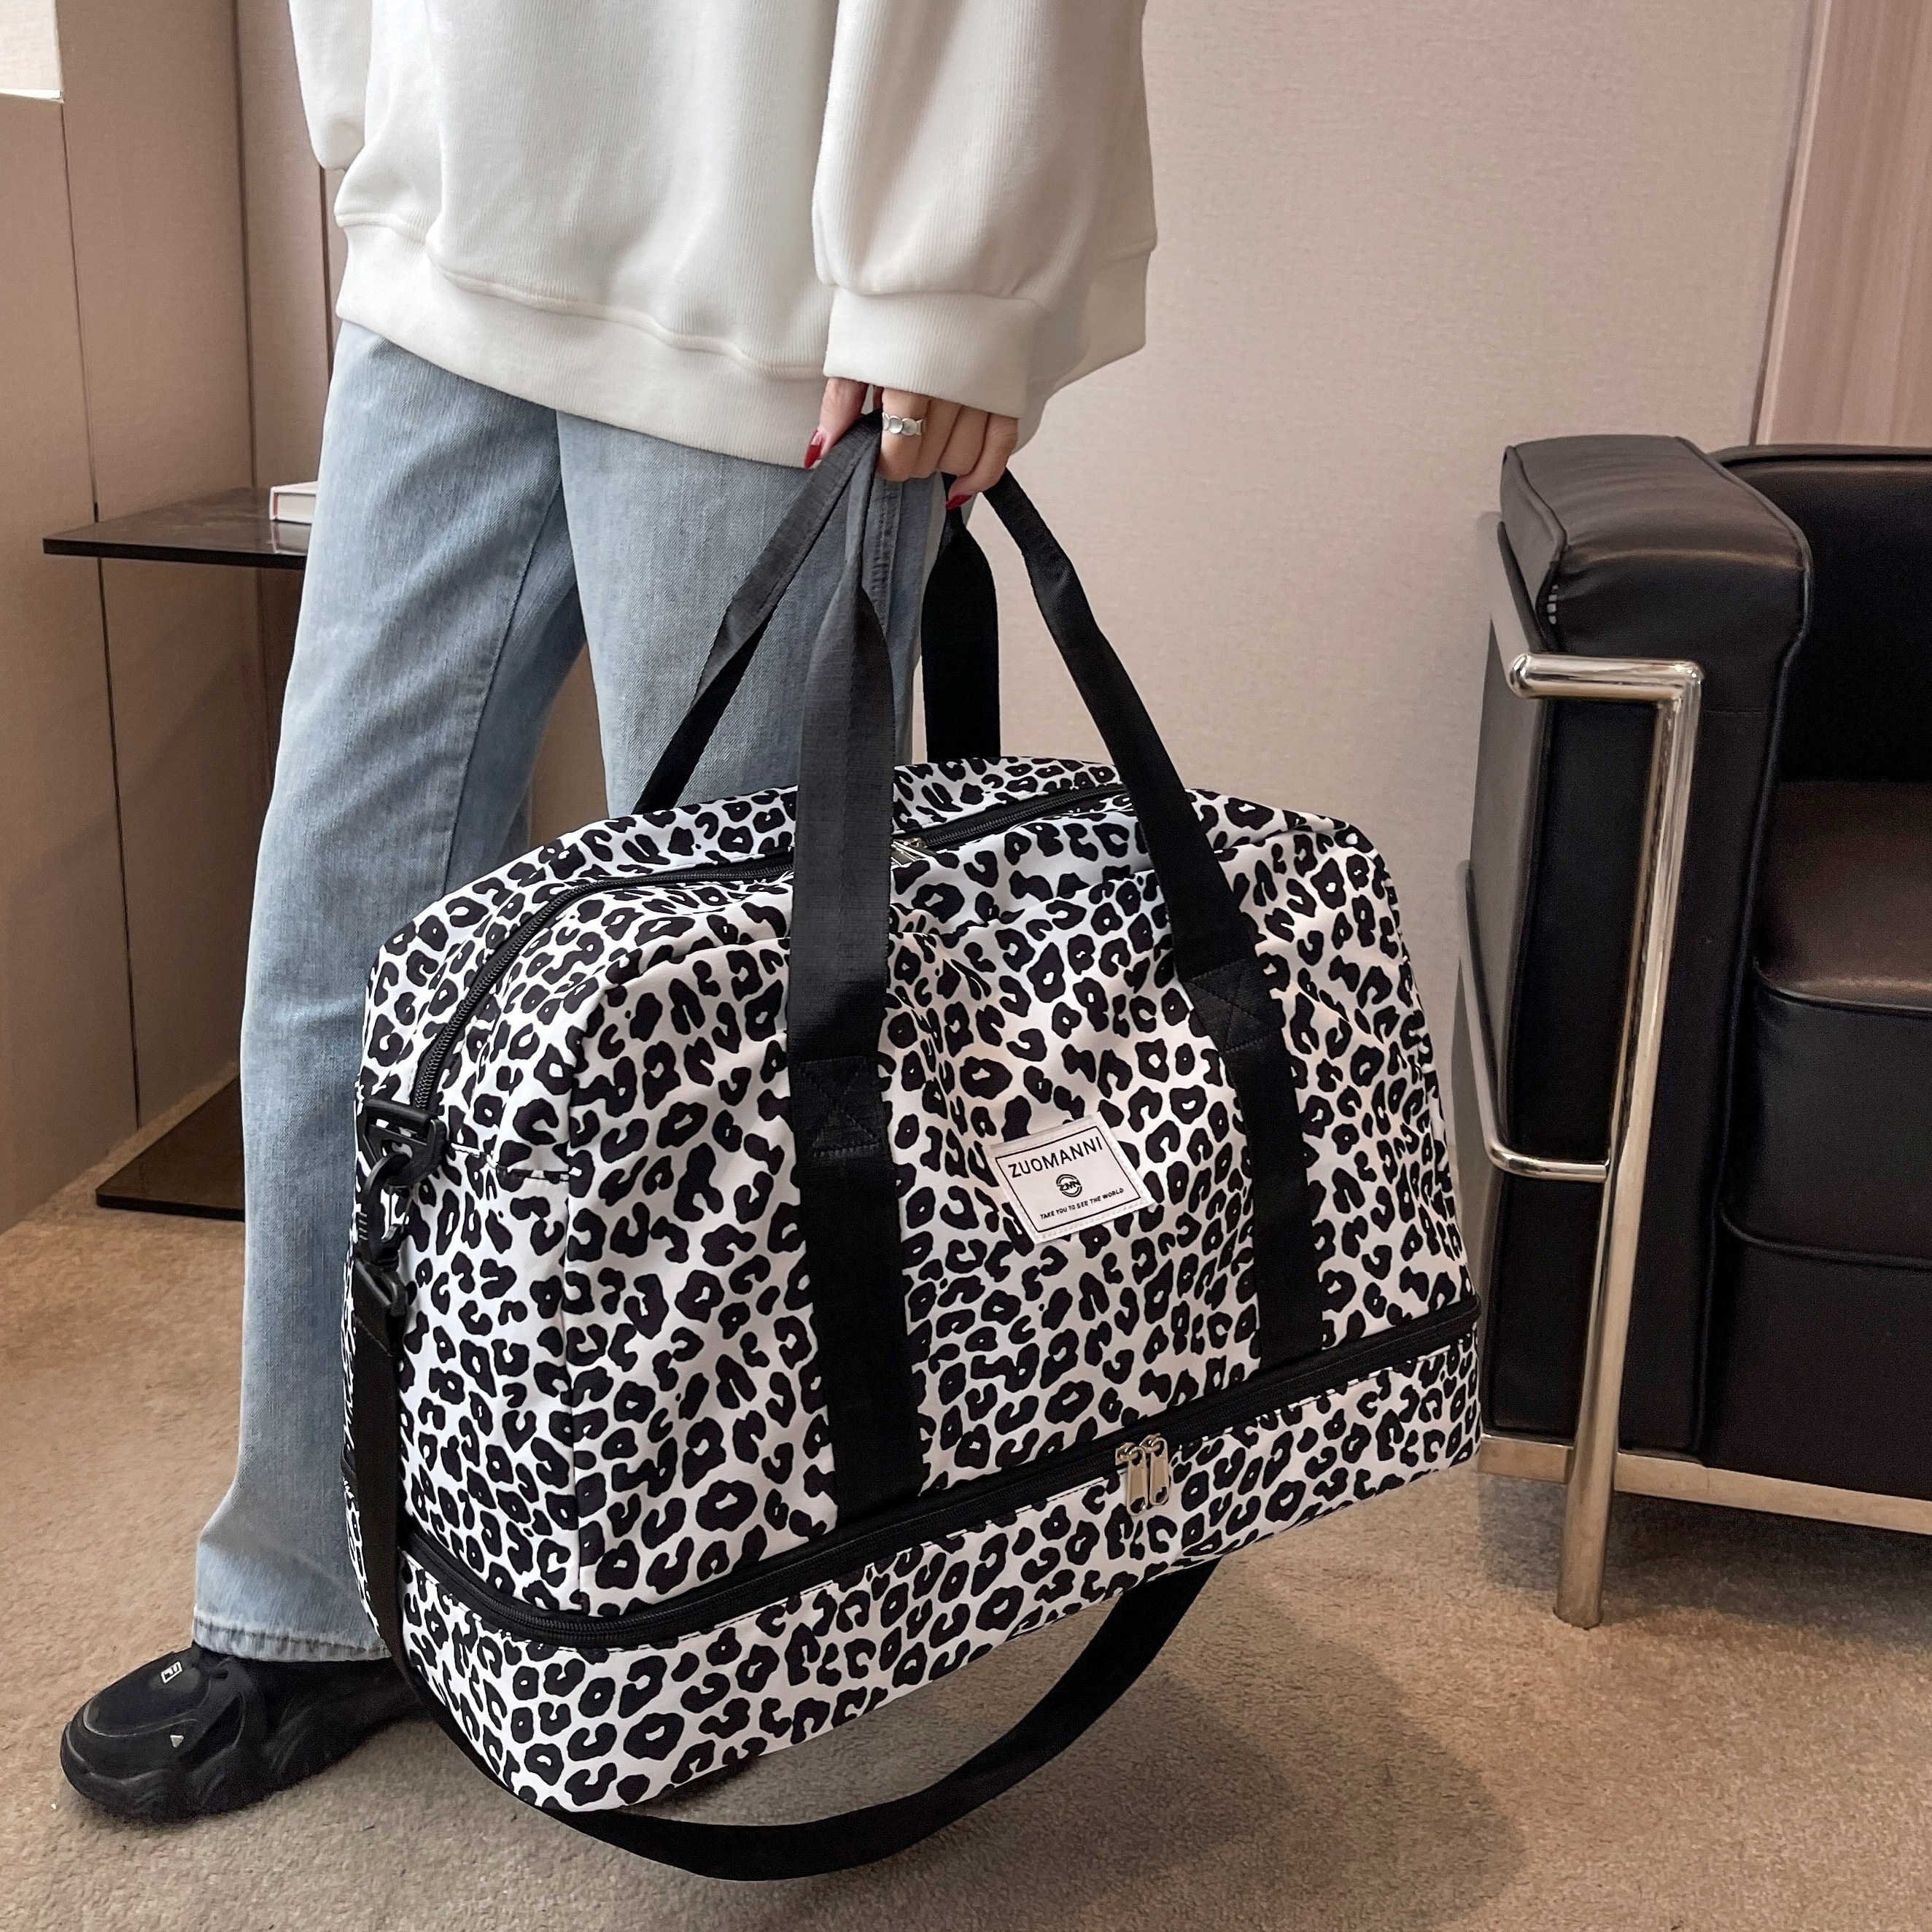 VICTORIA'S SECRET Quilted Duffle Pink Logo Zipper Travel Lounge Bag